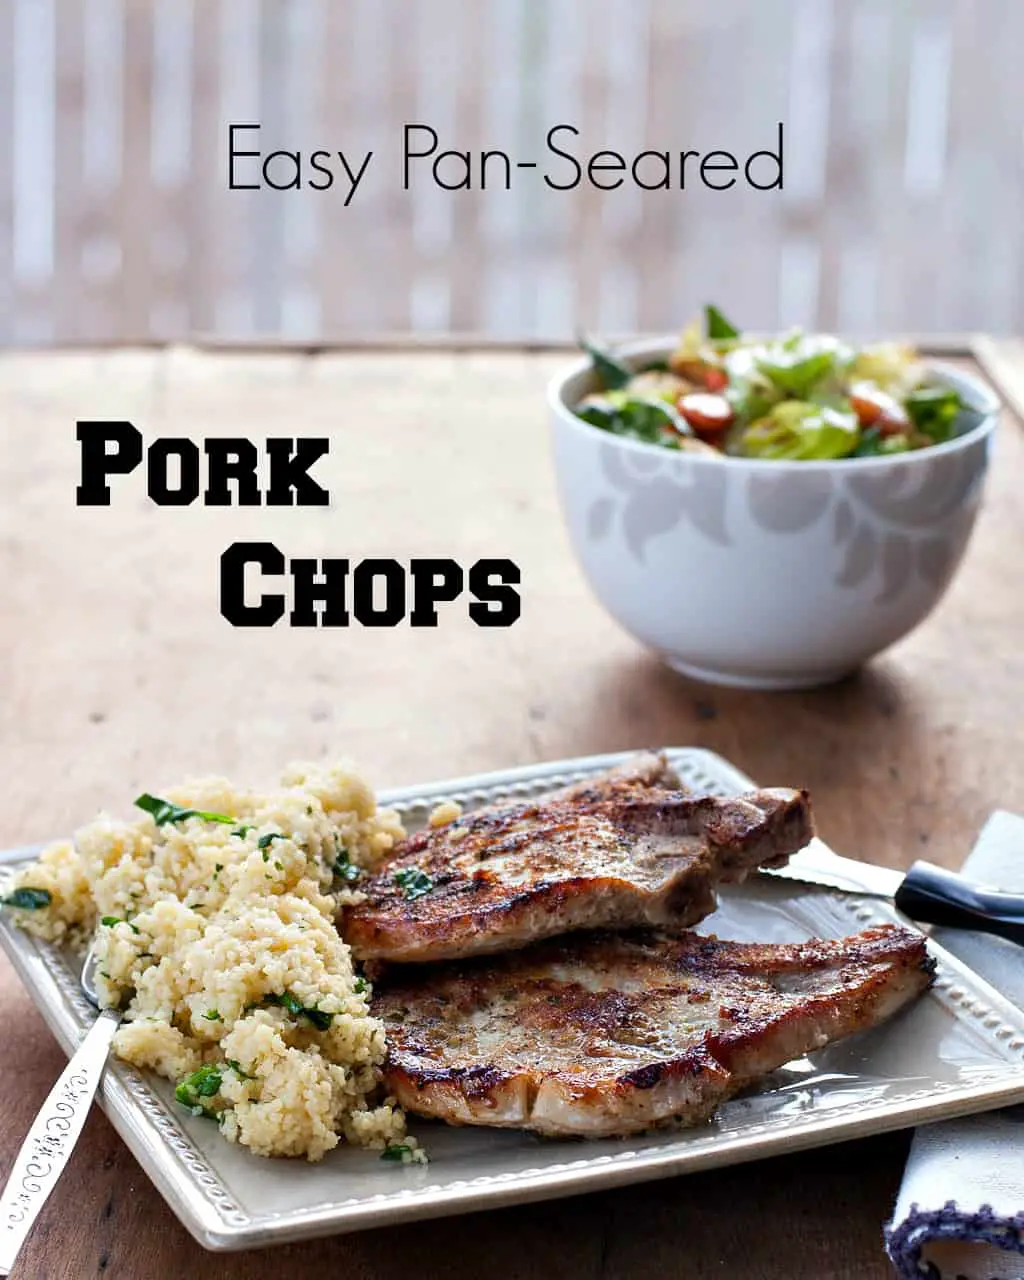 Easy Pan-Seared Pork Chops - perfect weeknight meal - thekitchensnob.com